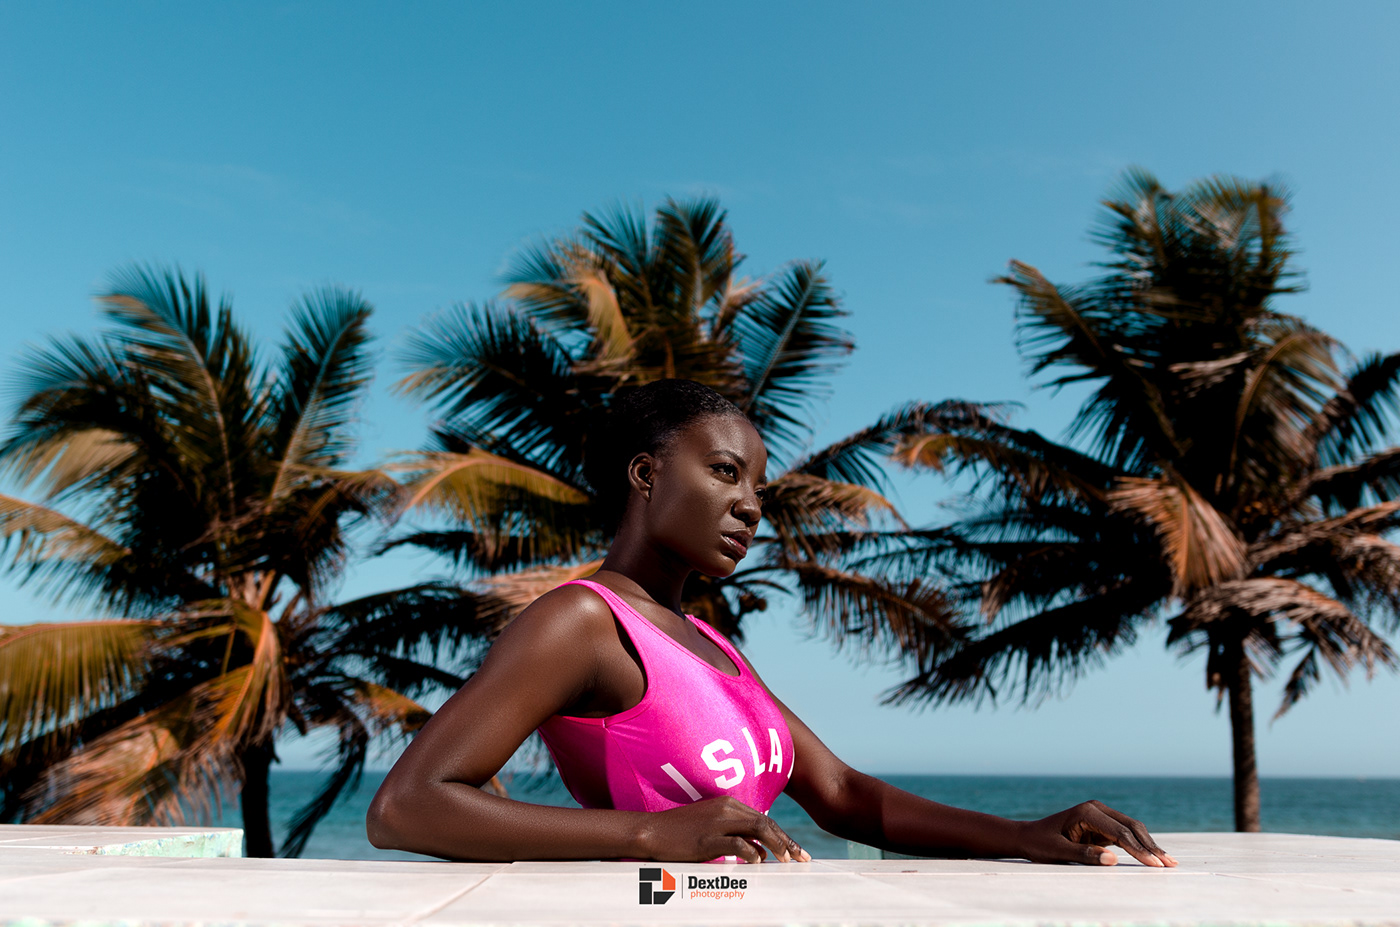 DextDee Photography beach bikini Ghana nikon d7000